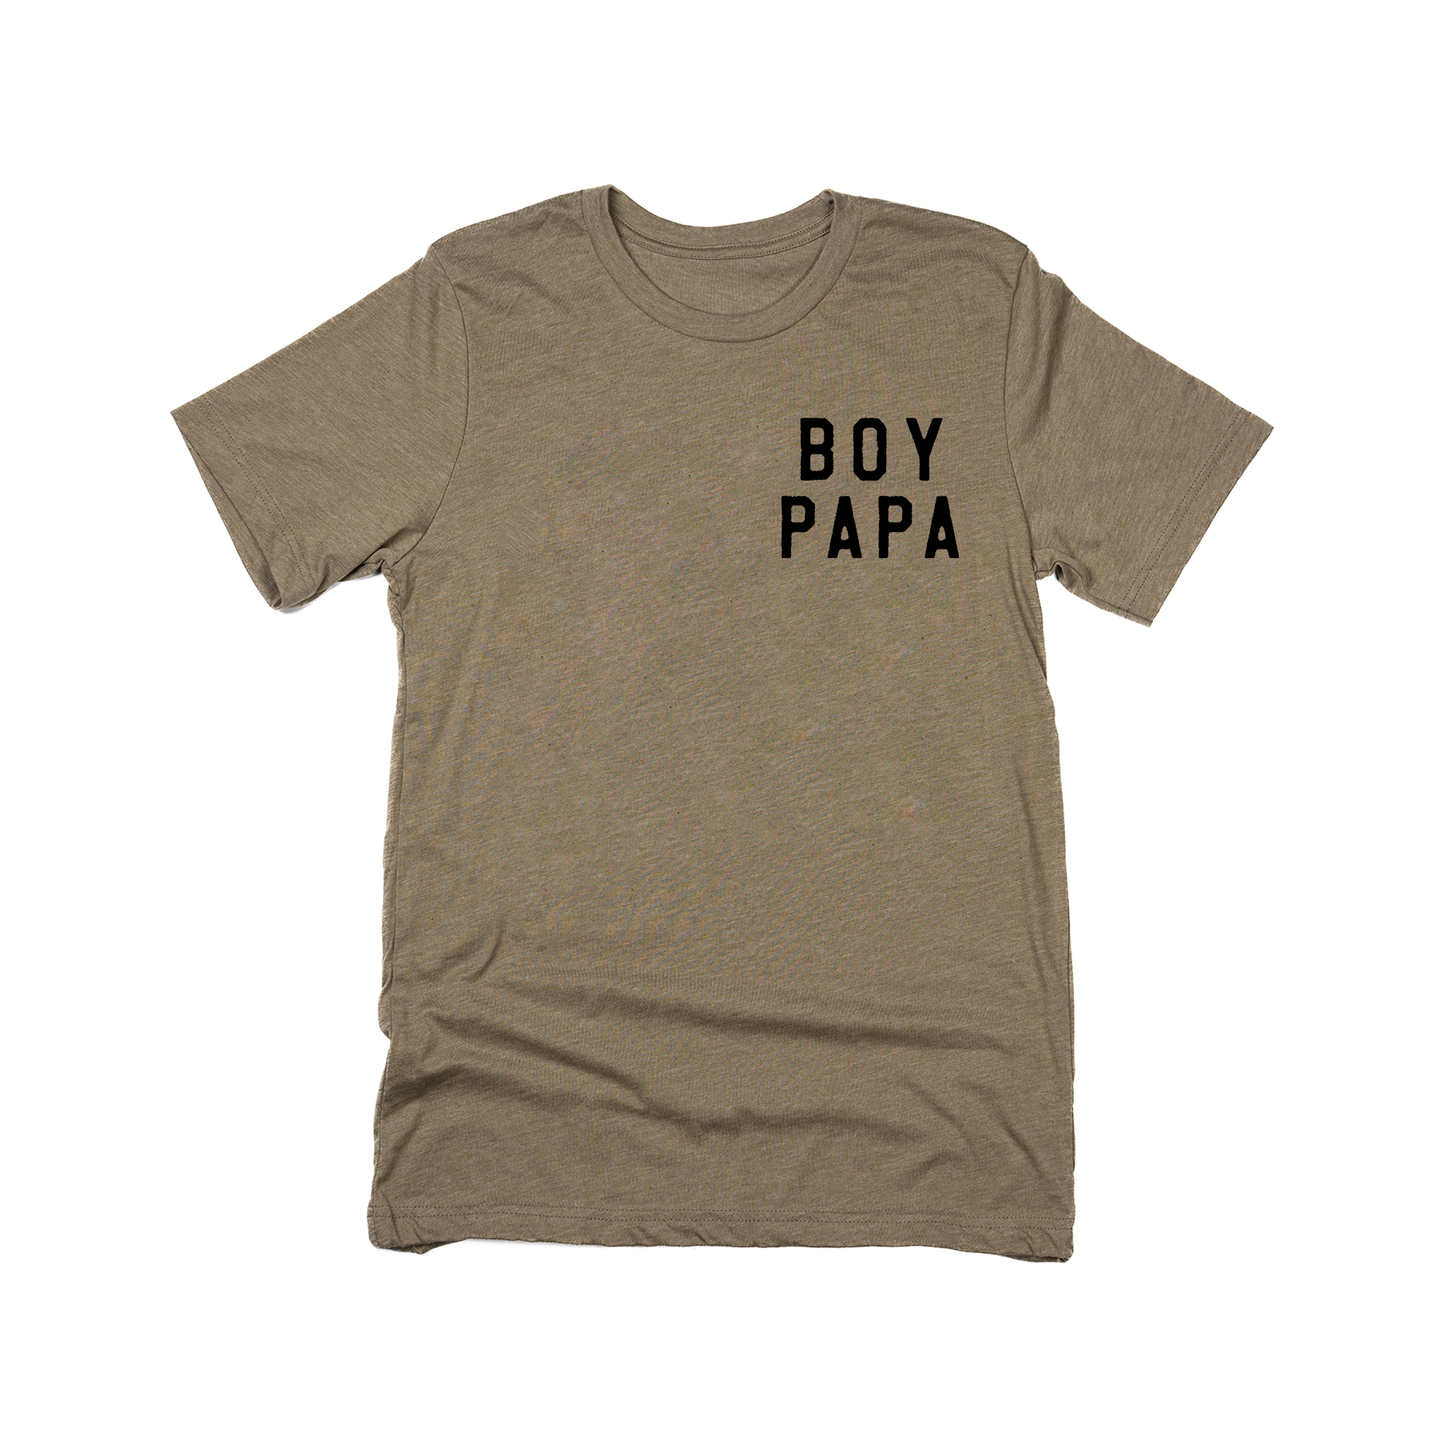 Boy Papa (Pocket, Black) - Tee (Olive)